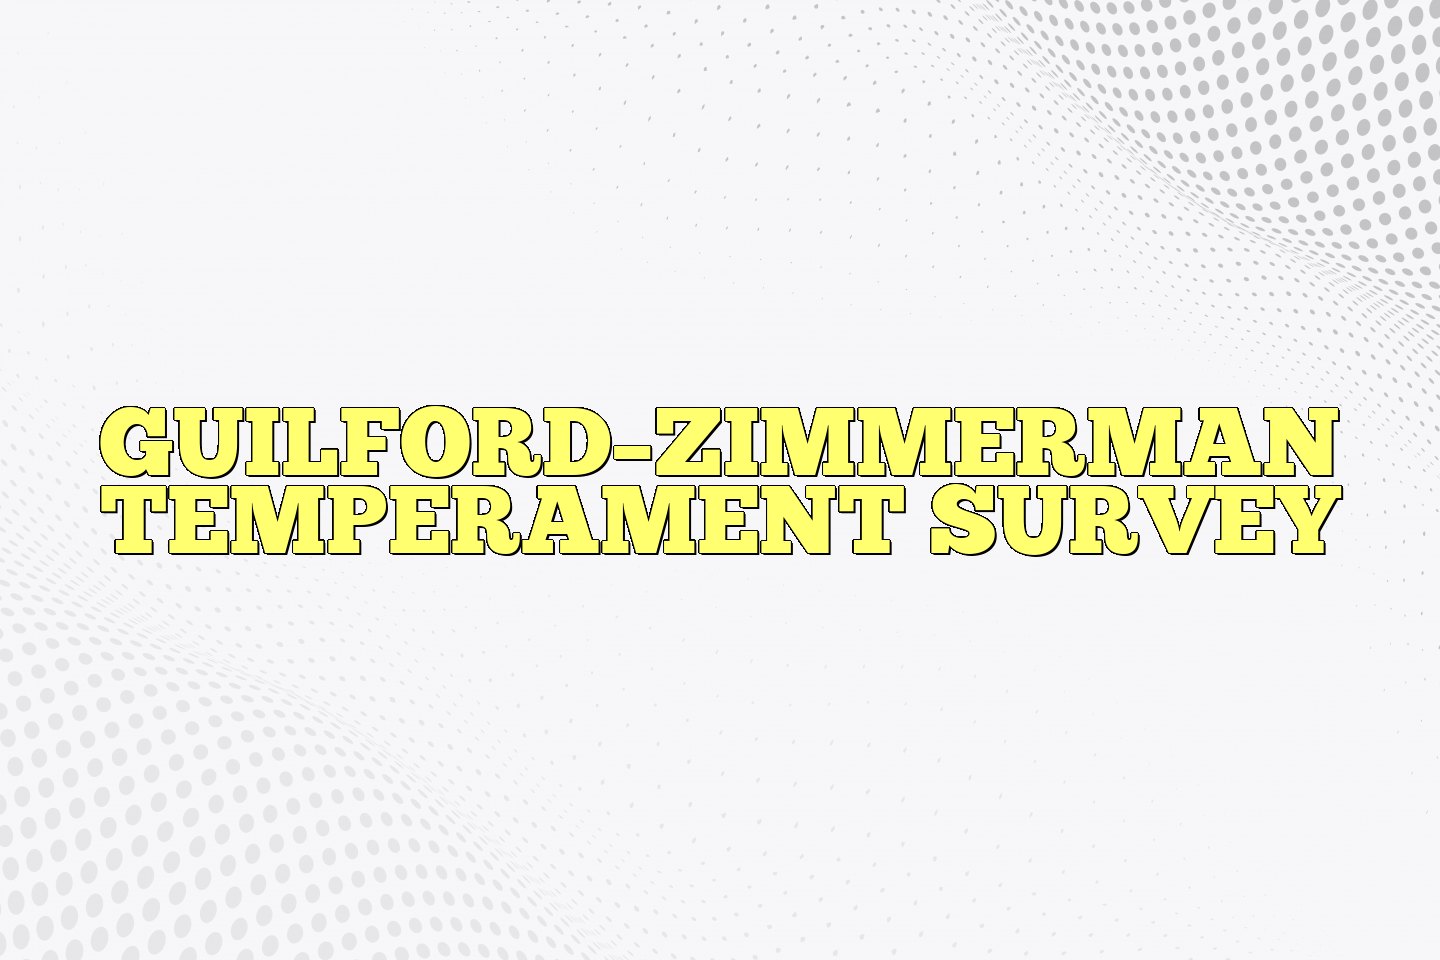 guilford-zimmerman-temperament-survey